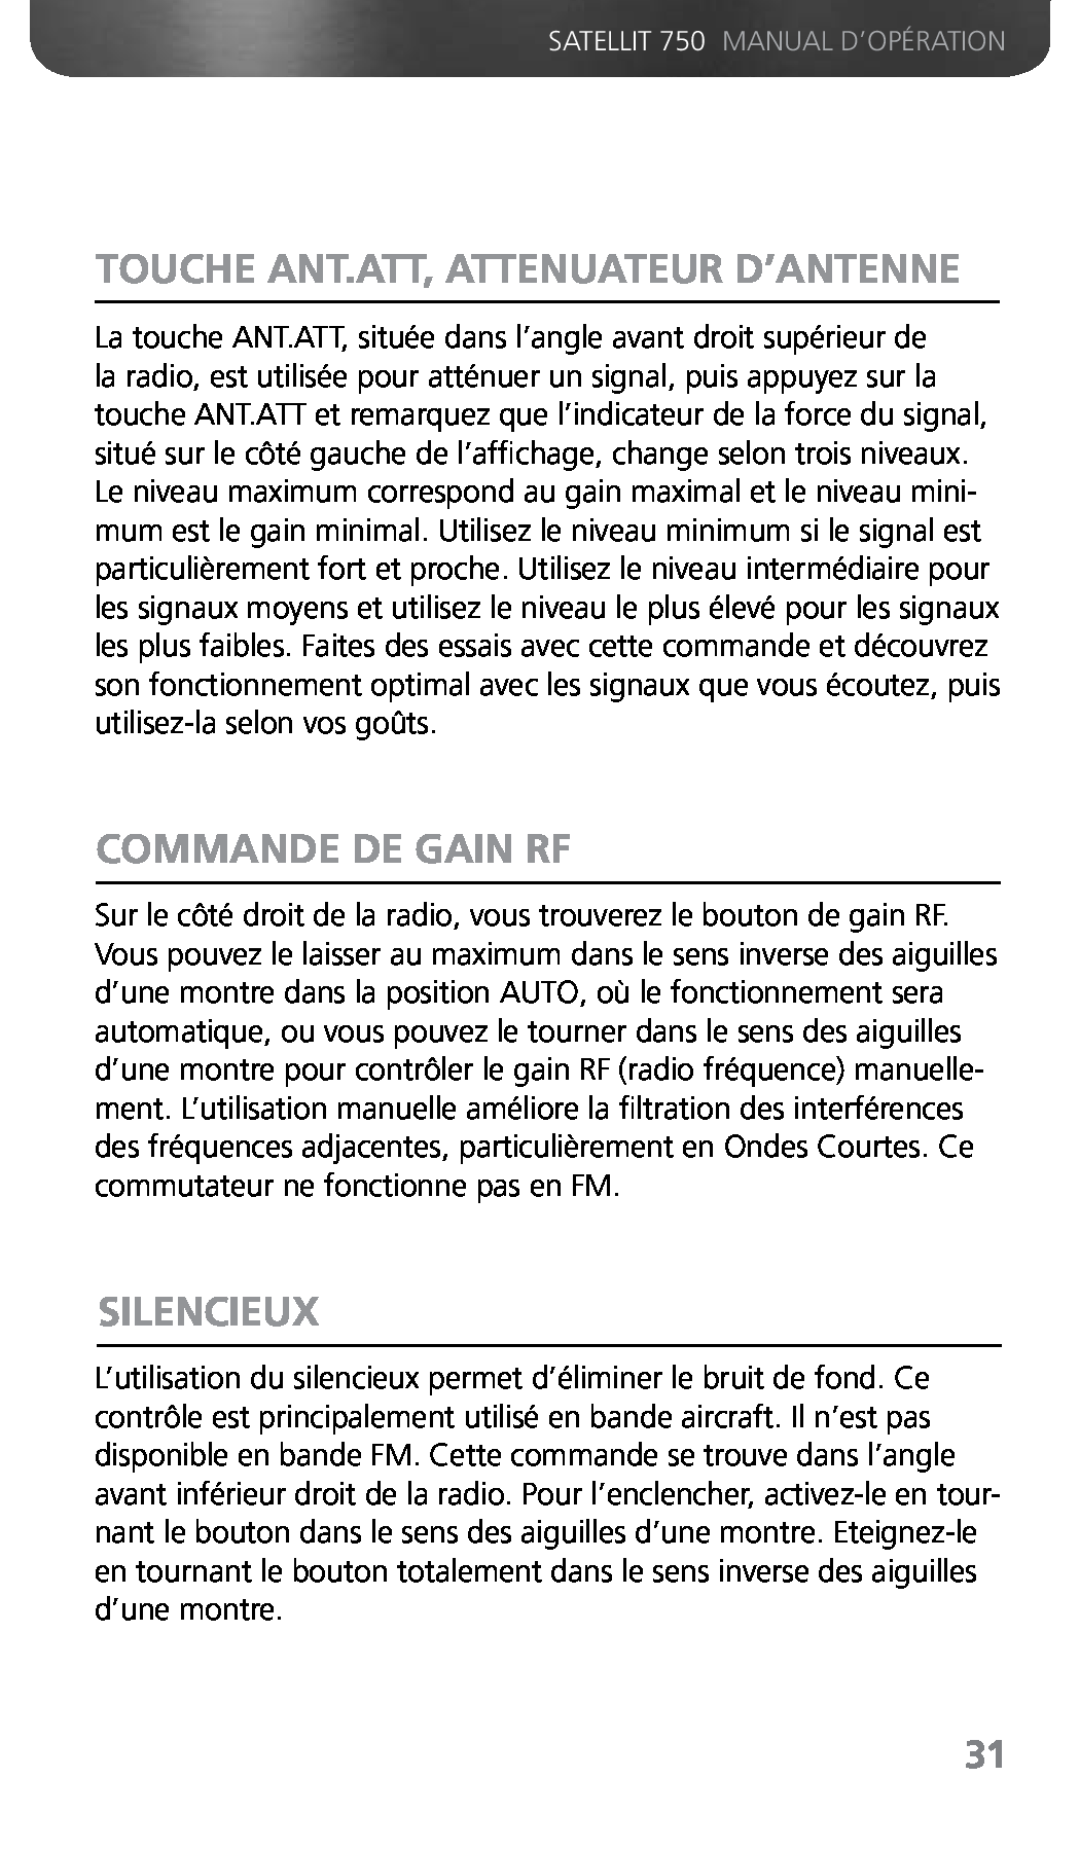 Grundig 750 owner manual Touche Ant.Att, Attenuateur D’Antenne, Commande De Gain Rf, Silencieux 